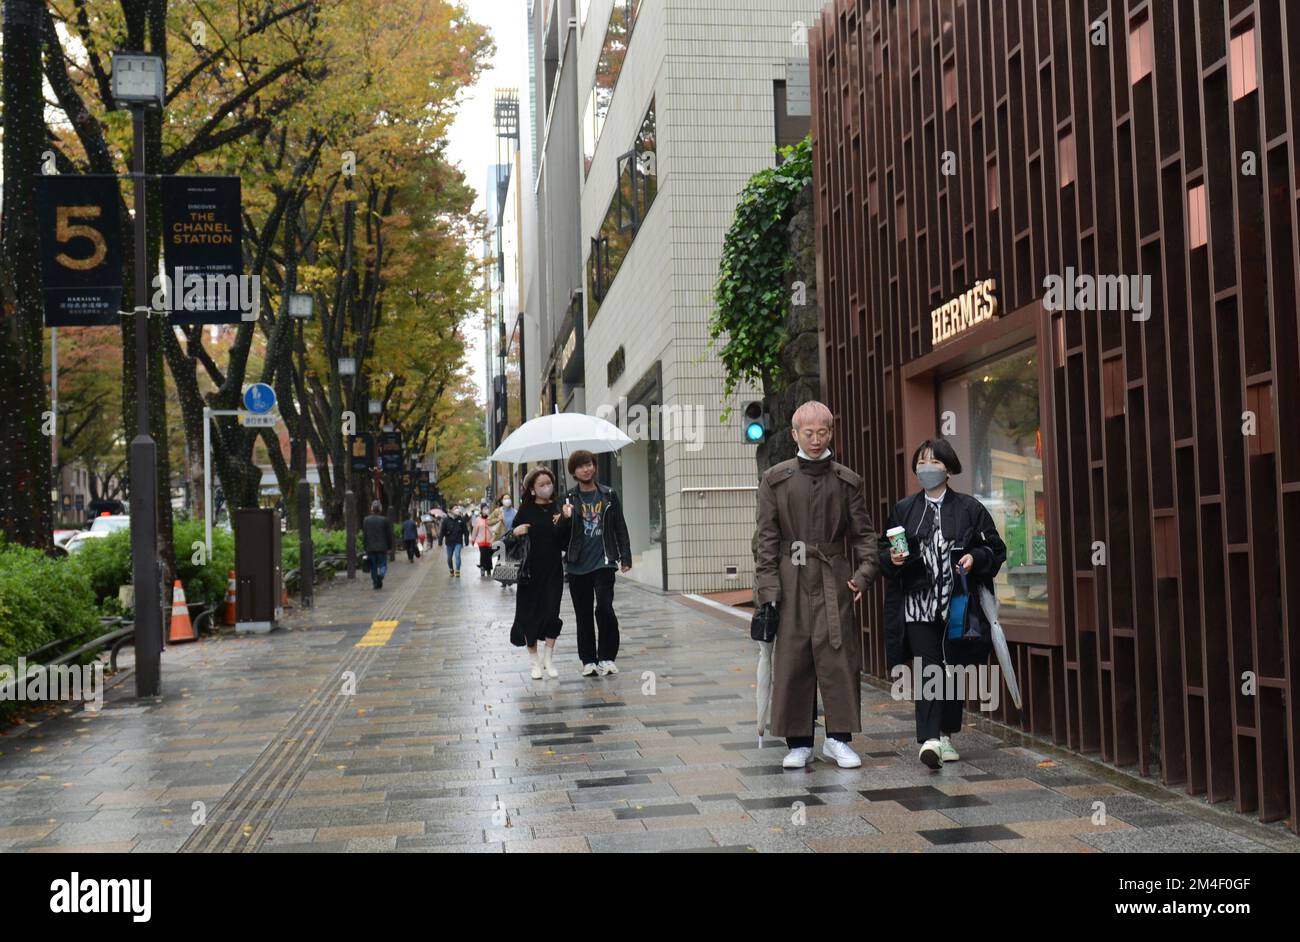 The fashionable Omotesandō Avenue lined with stylish designer shops and hip cafes. Tokyo, Japan. Stock Photo